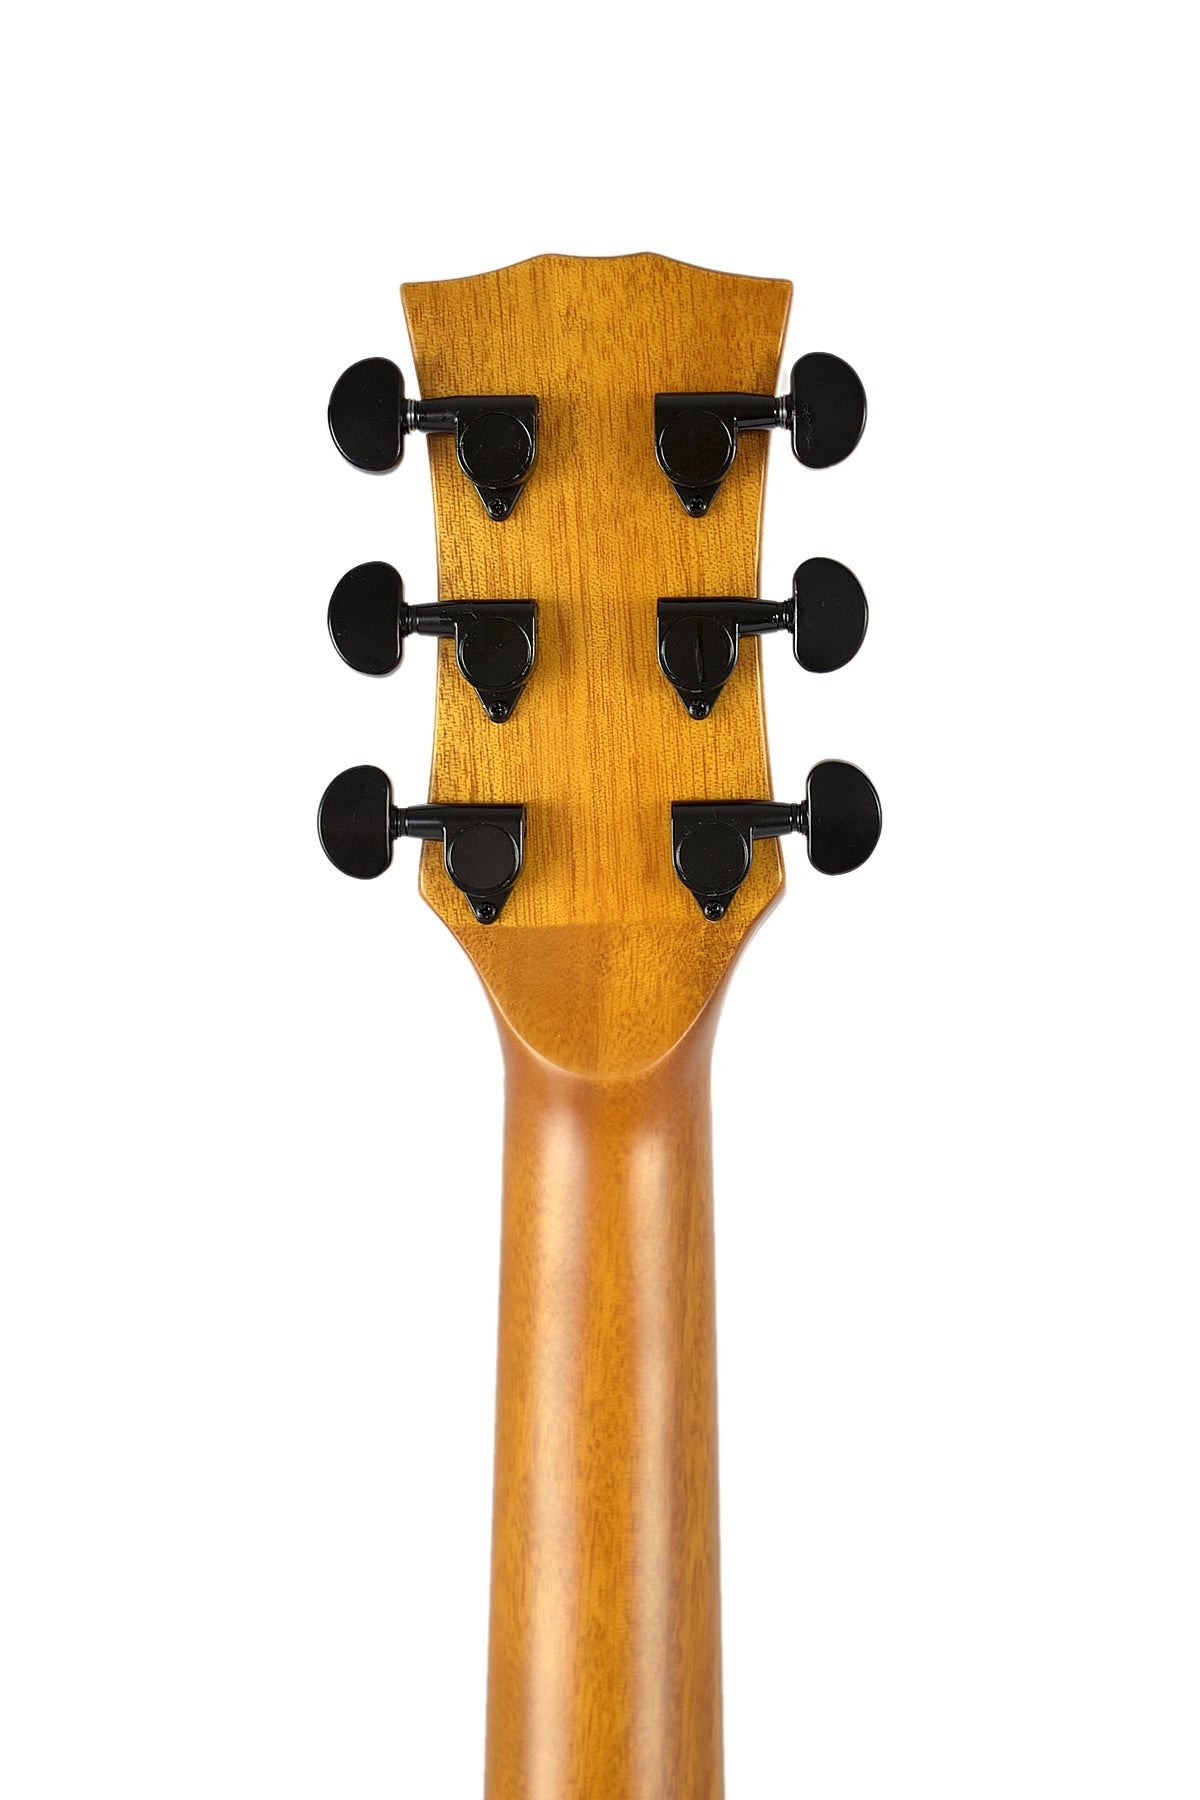 Klema Solid Canadian Cedar Top Flamed Mahogany Body Jumbo Acoustic Guitar - Natural K200JC